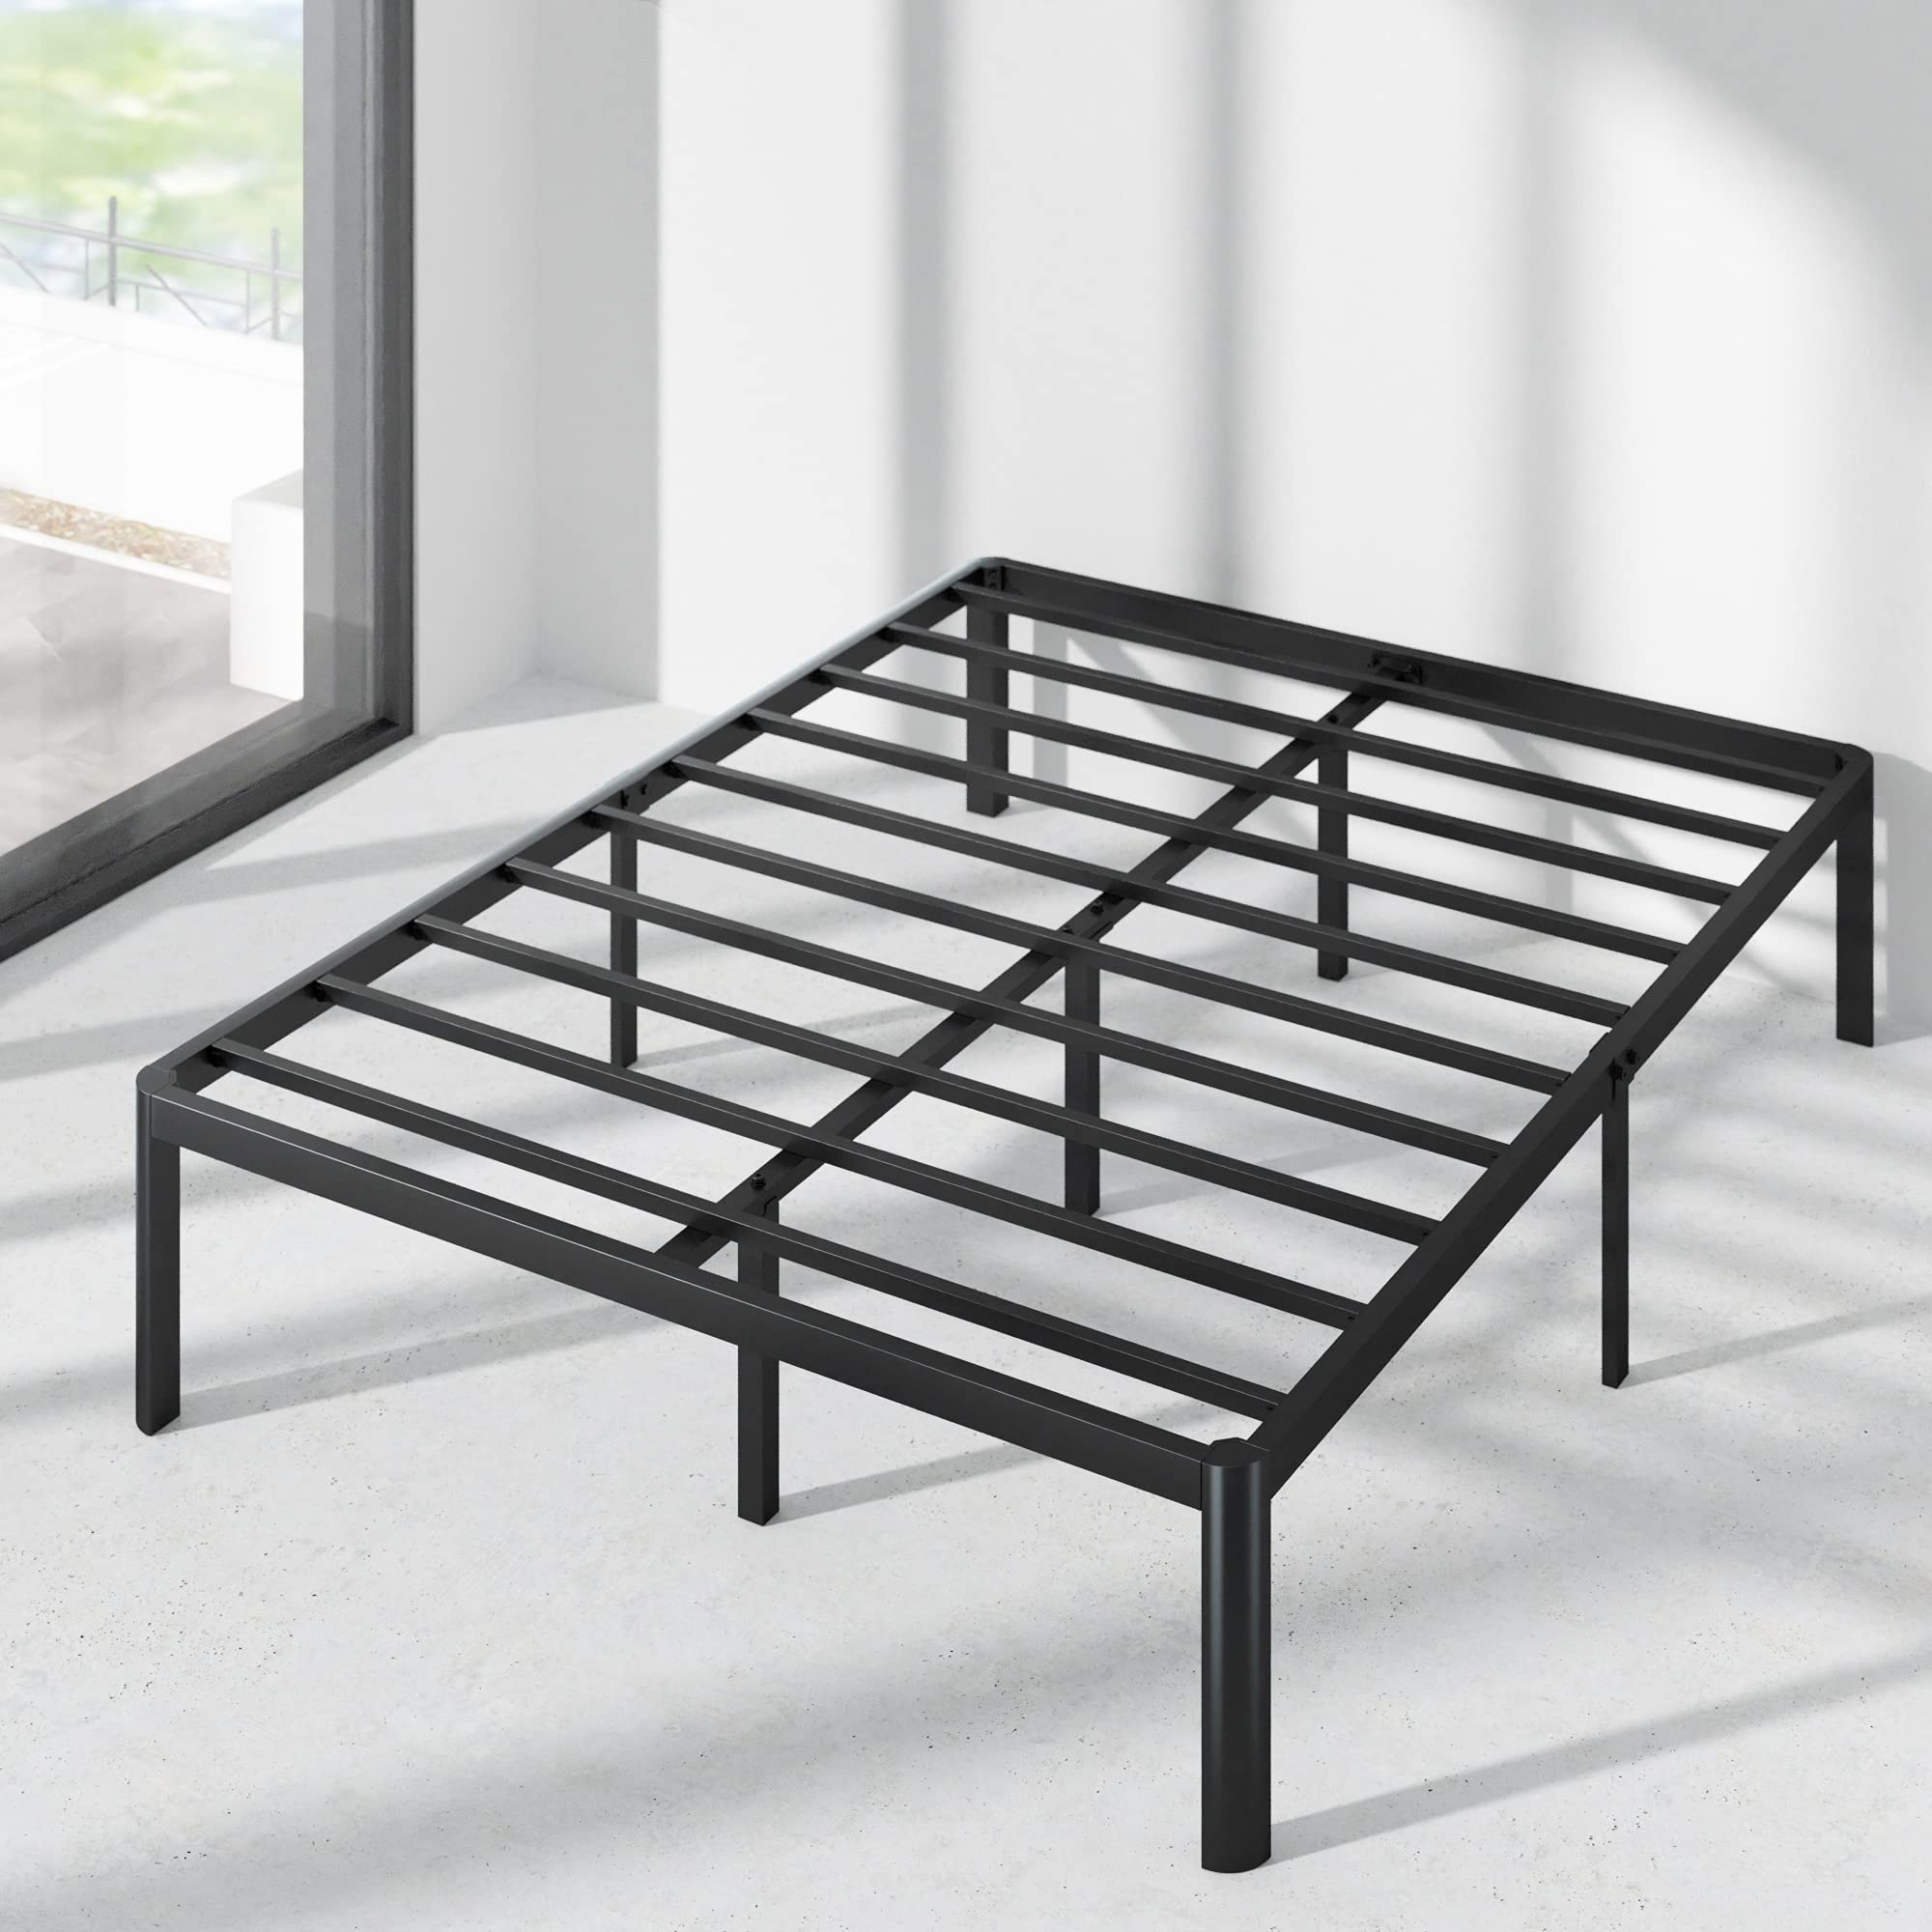 Book Cover ZINUS Van 16 Inch Metal Platform Bed Frame / Steel Slat Support / No Box Spring Needed / Easy Assembly, Black, Full 16 Inch Full